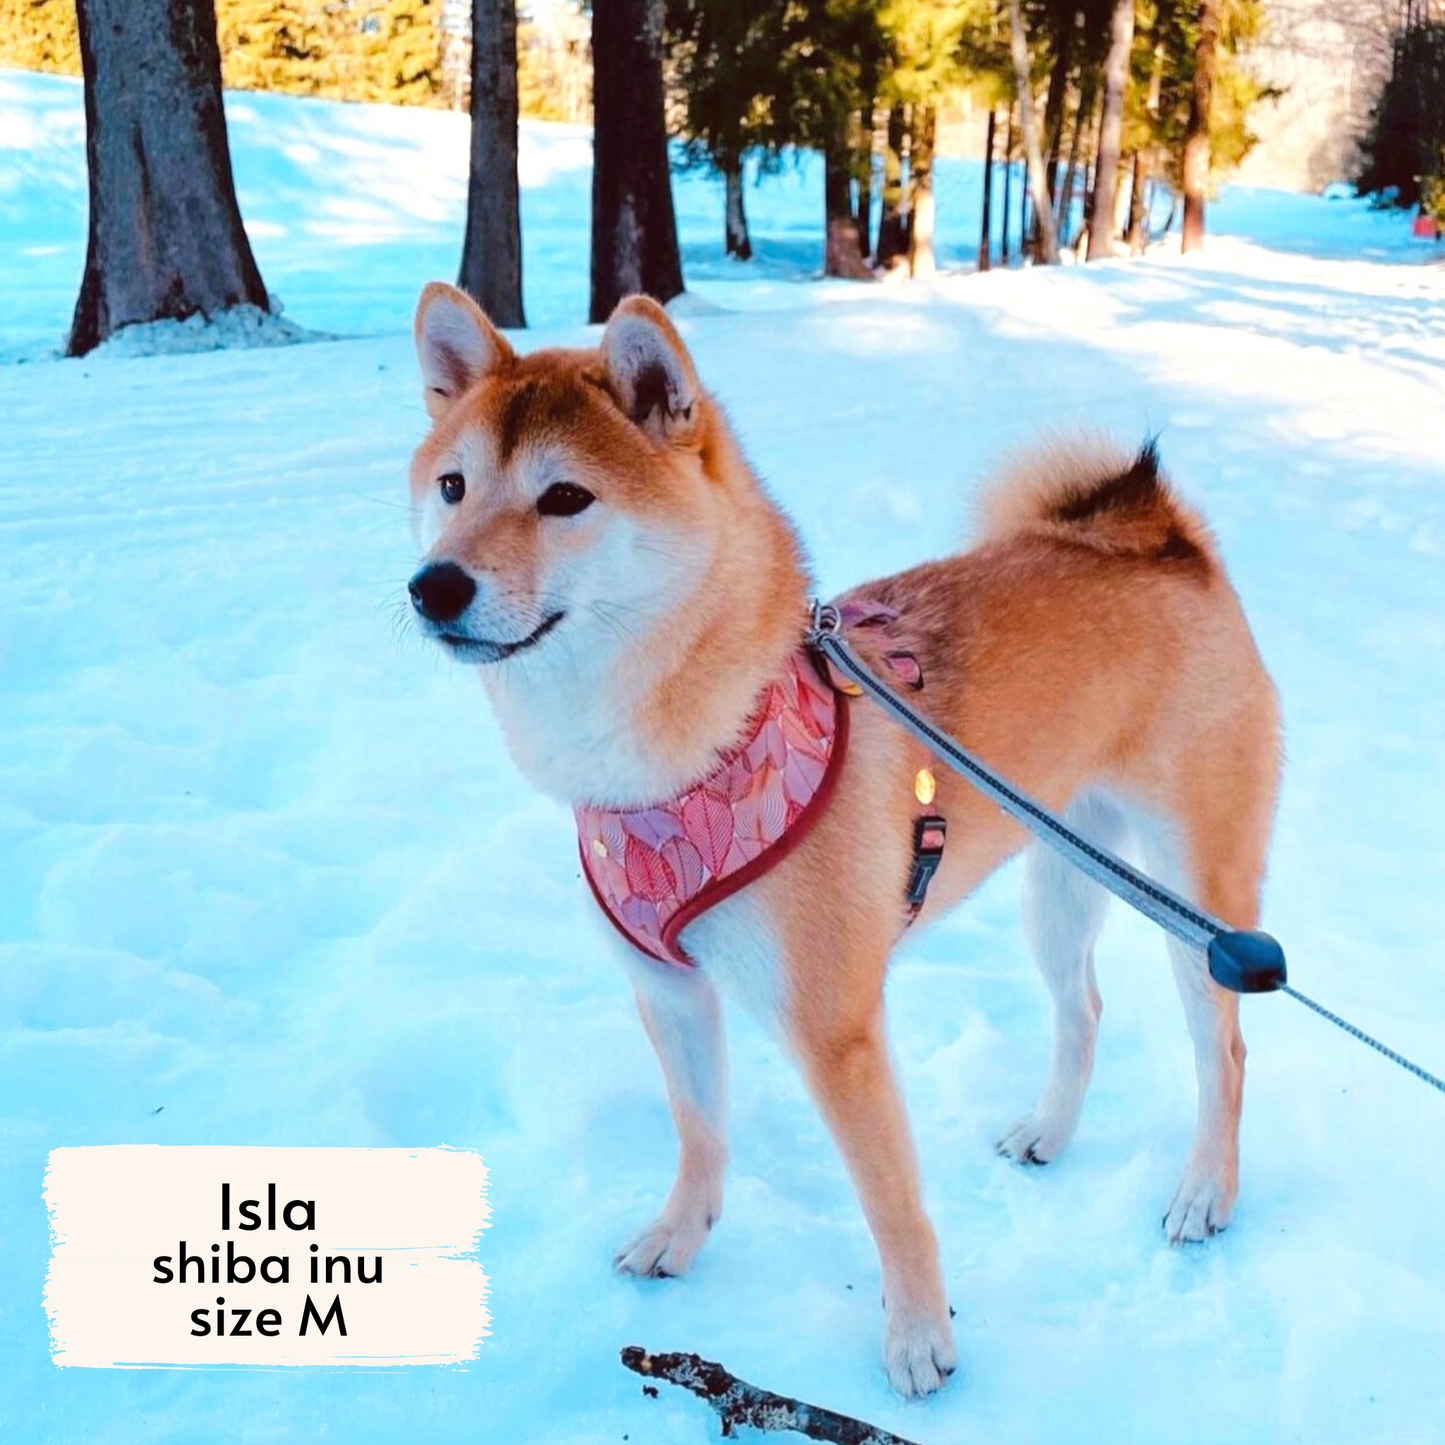 Isla, Shiba Inu in Switzerland, wearing Pata Paw's forest crunch dog harness